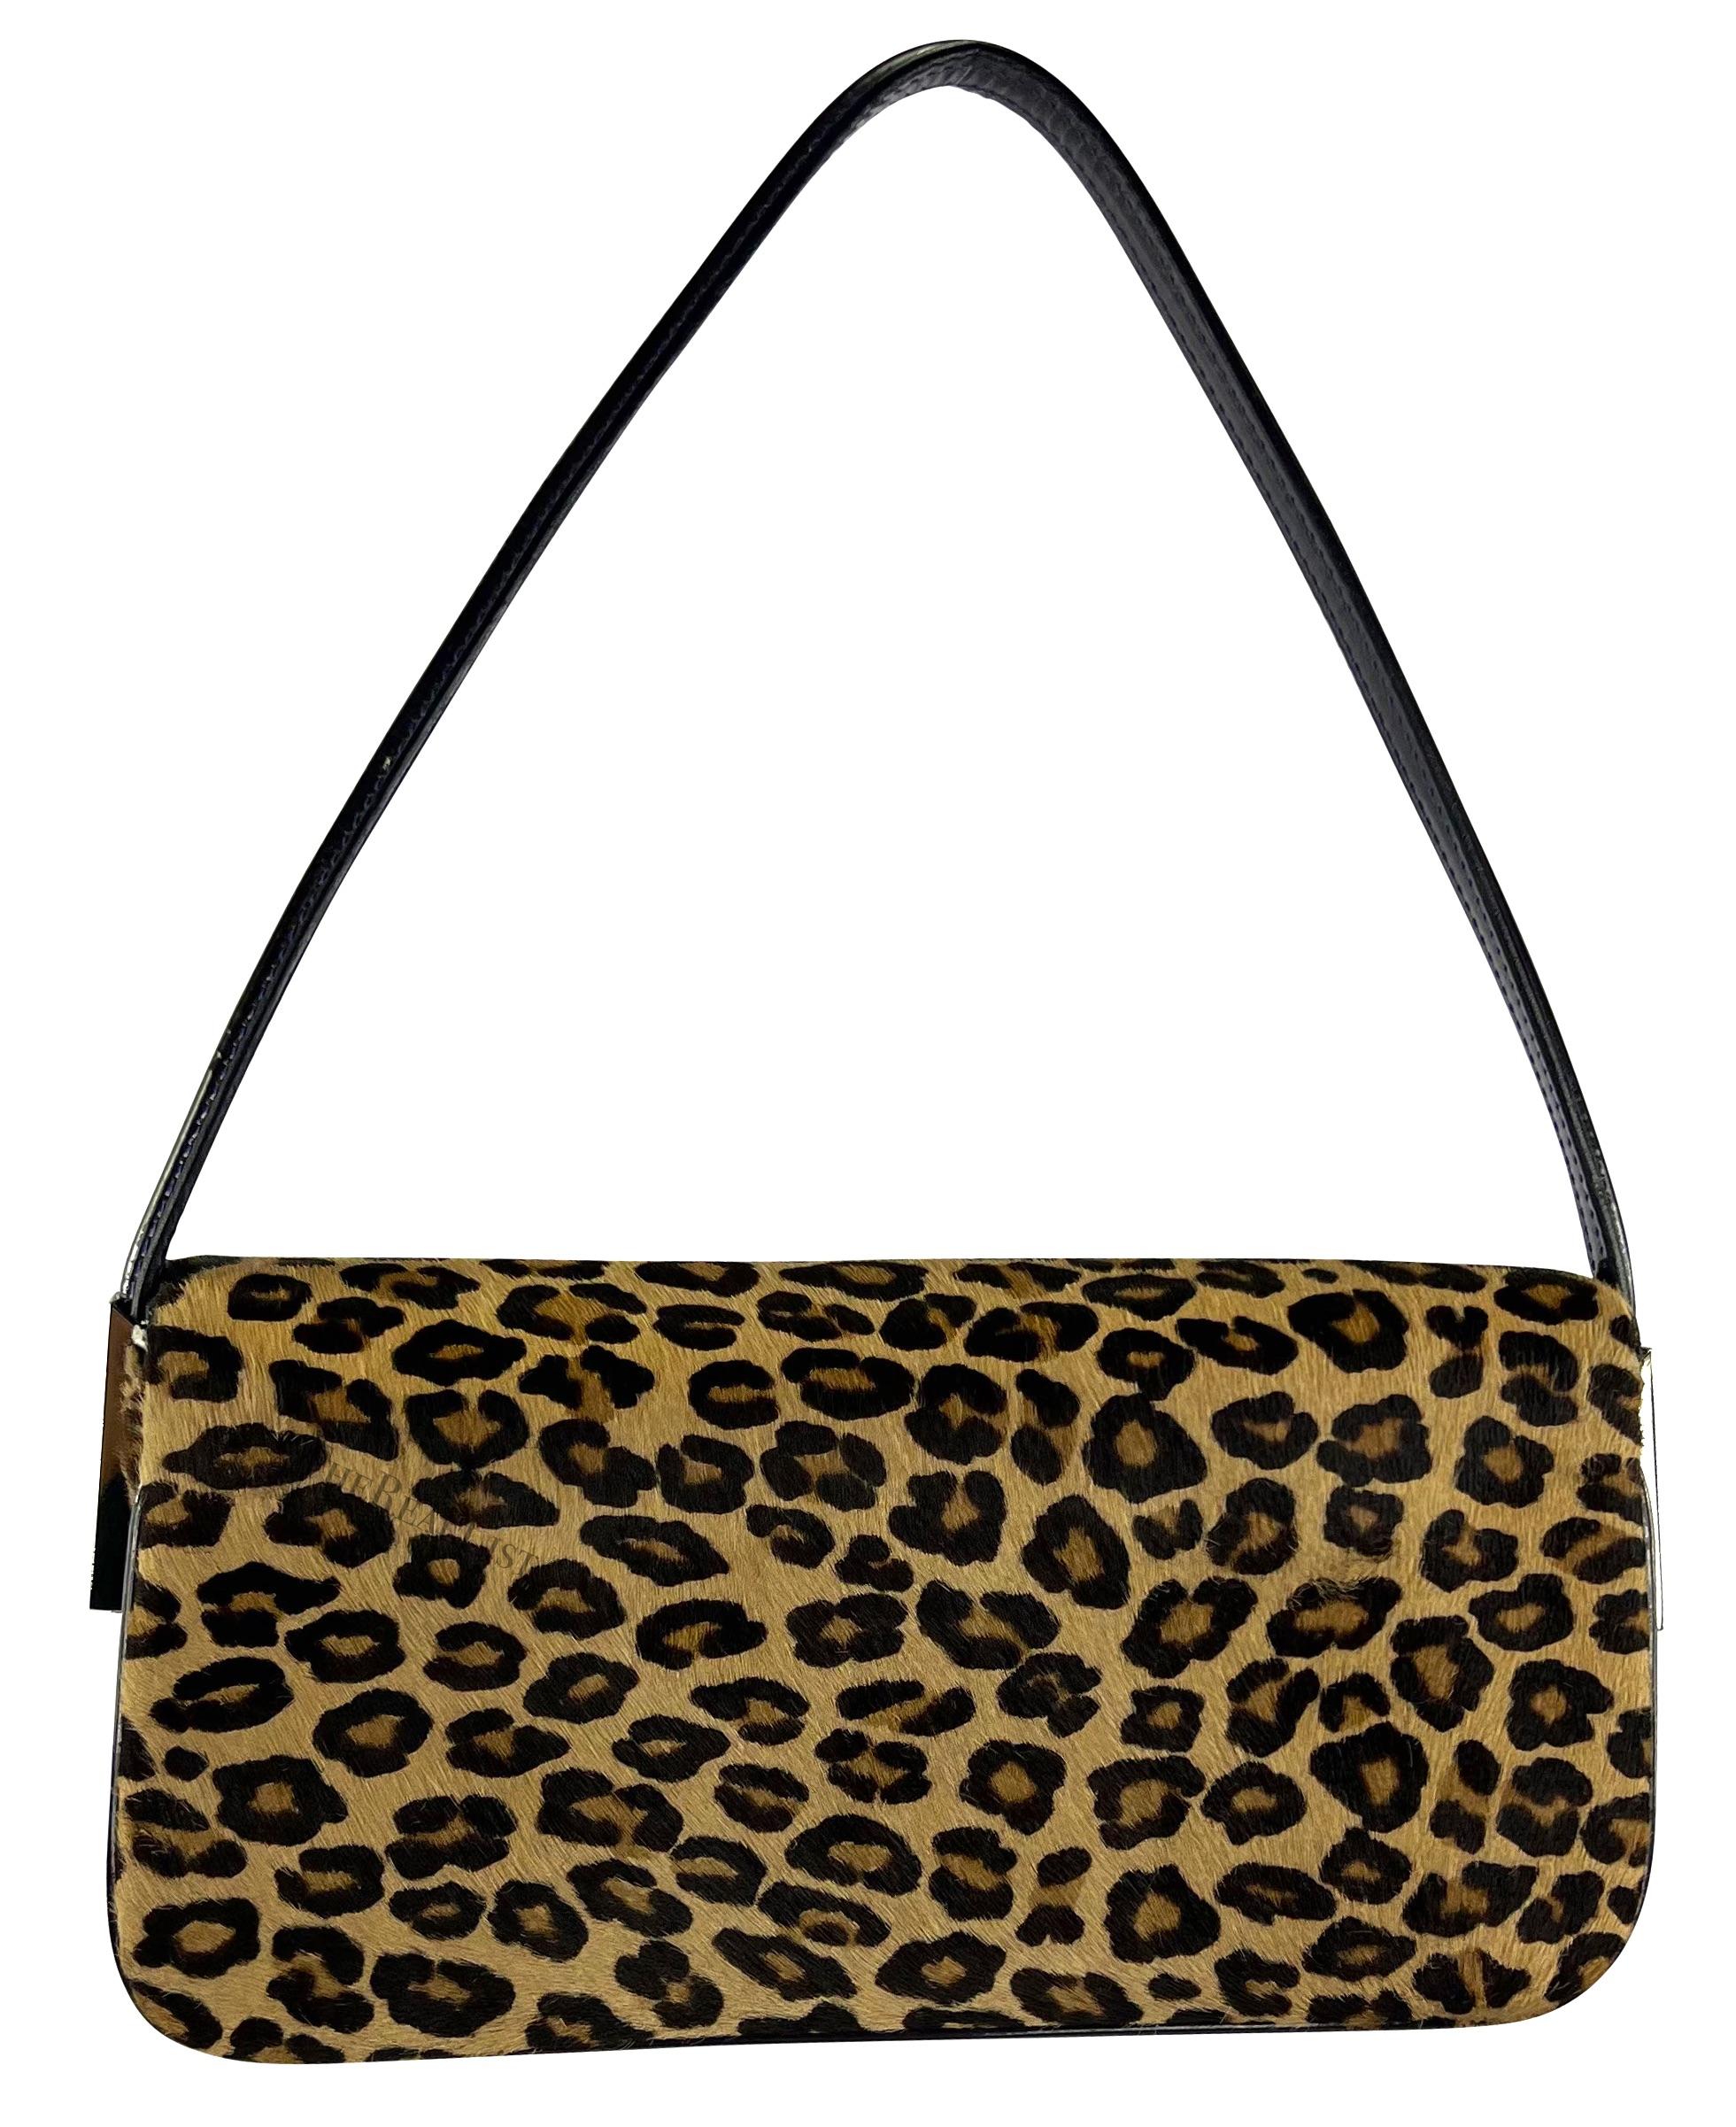 Women's F/W 2000 Dolce & Gabbana Cheetah Print Pony Hair Small Shoulder Bag For Sale